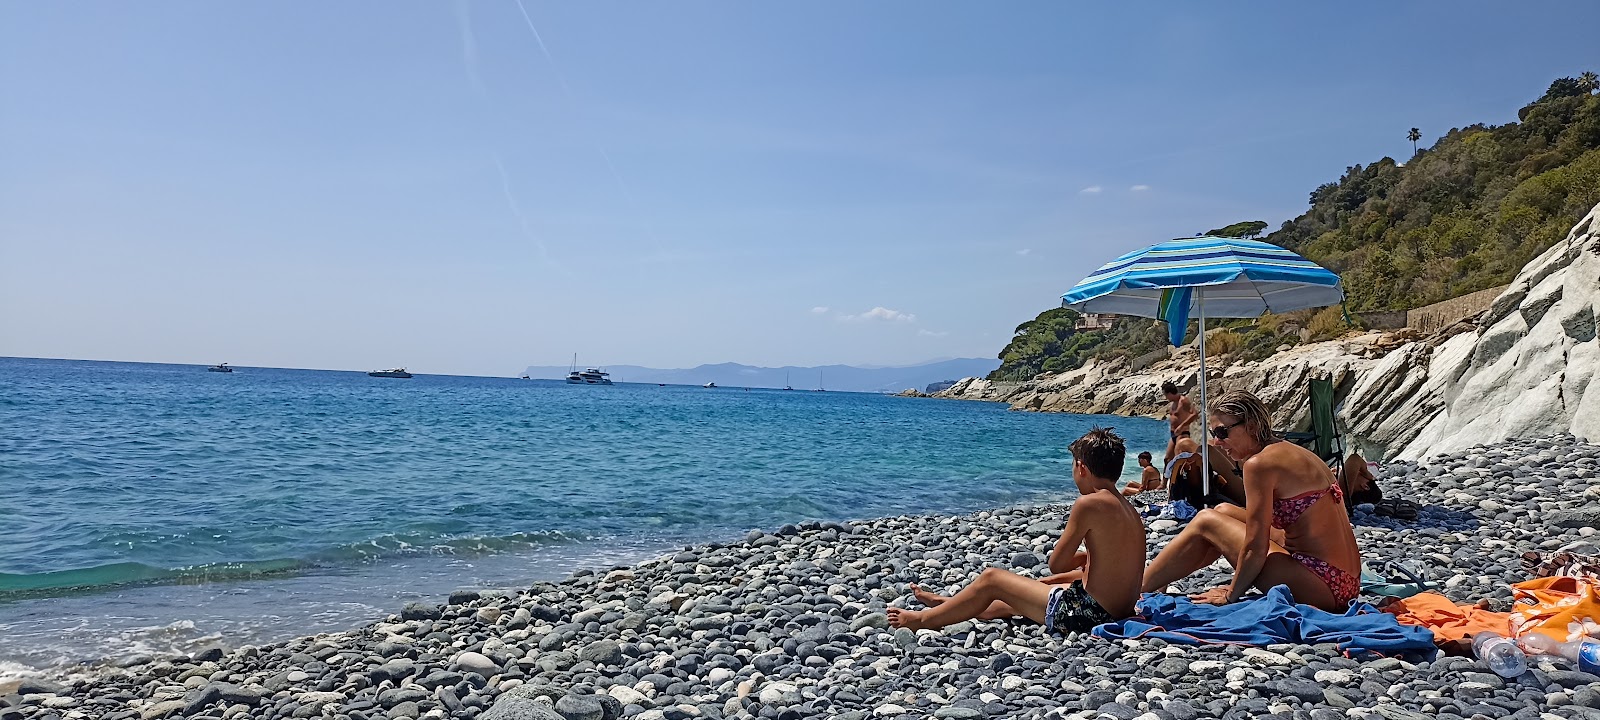 Foto de Spiaggia libera Abbelinou área de comodidades